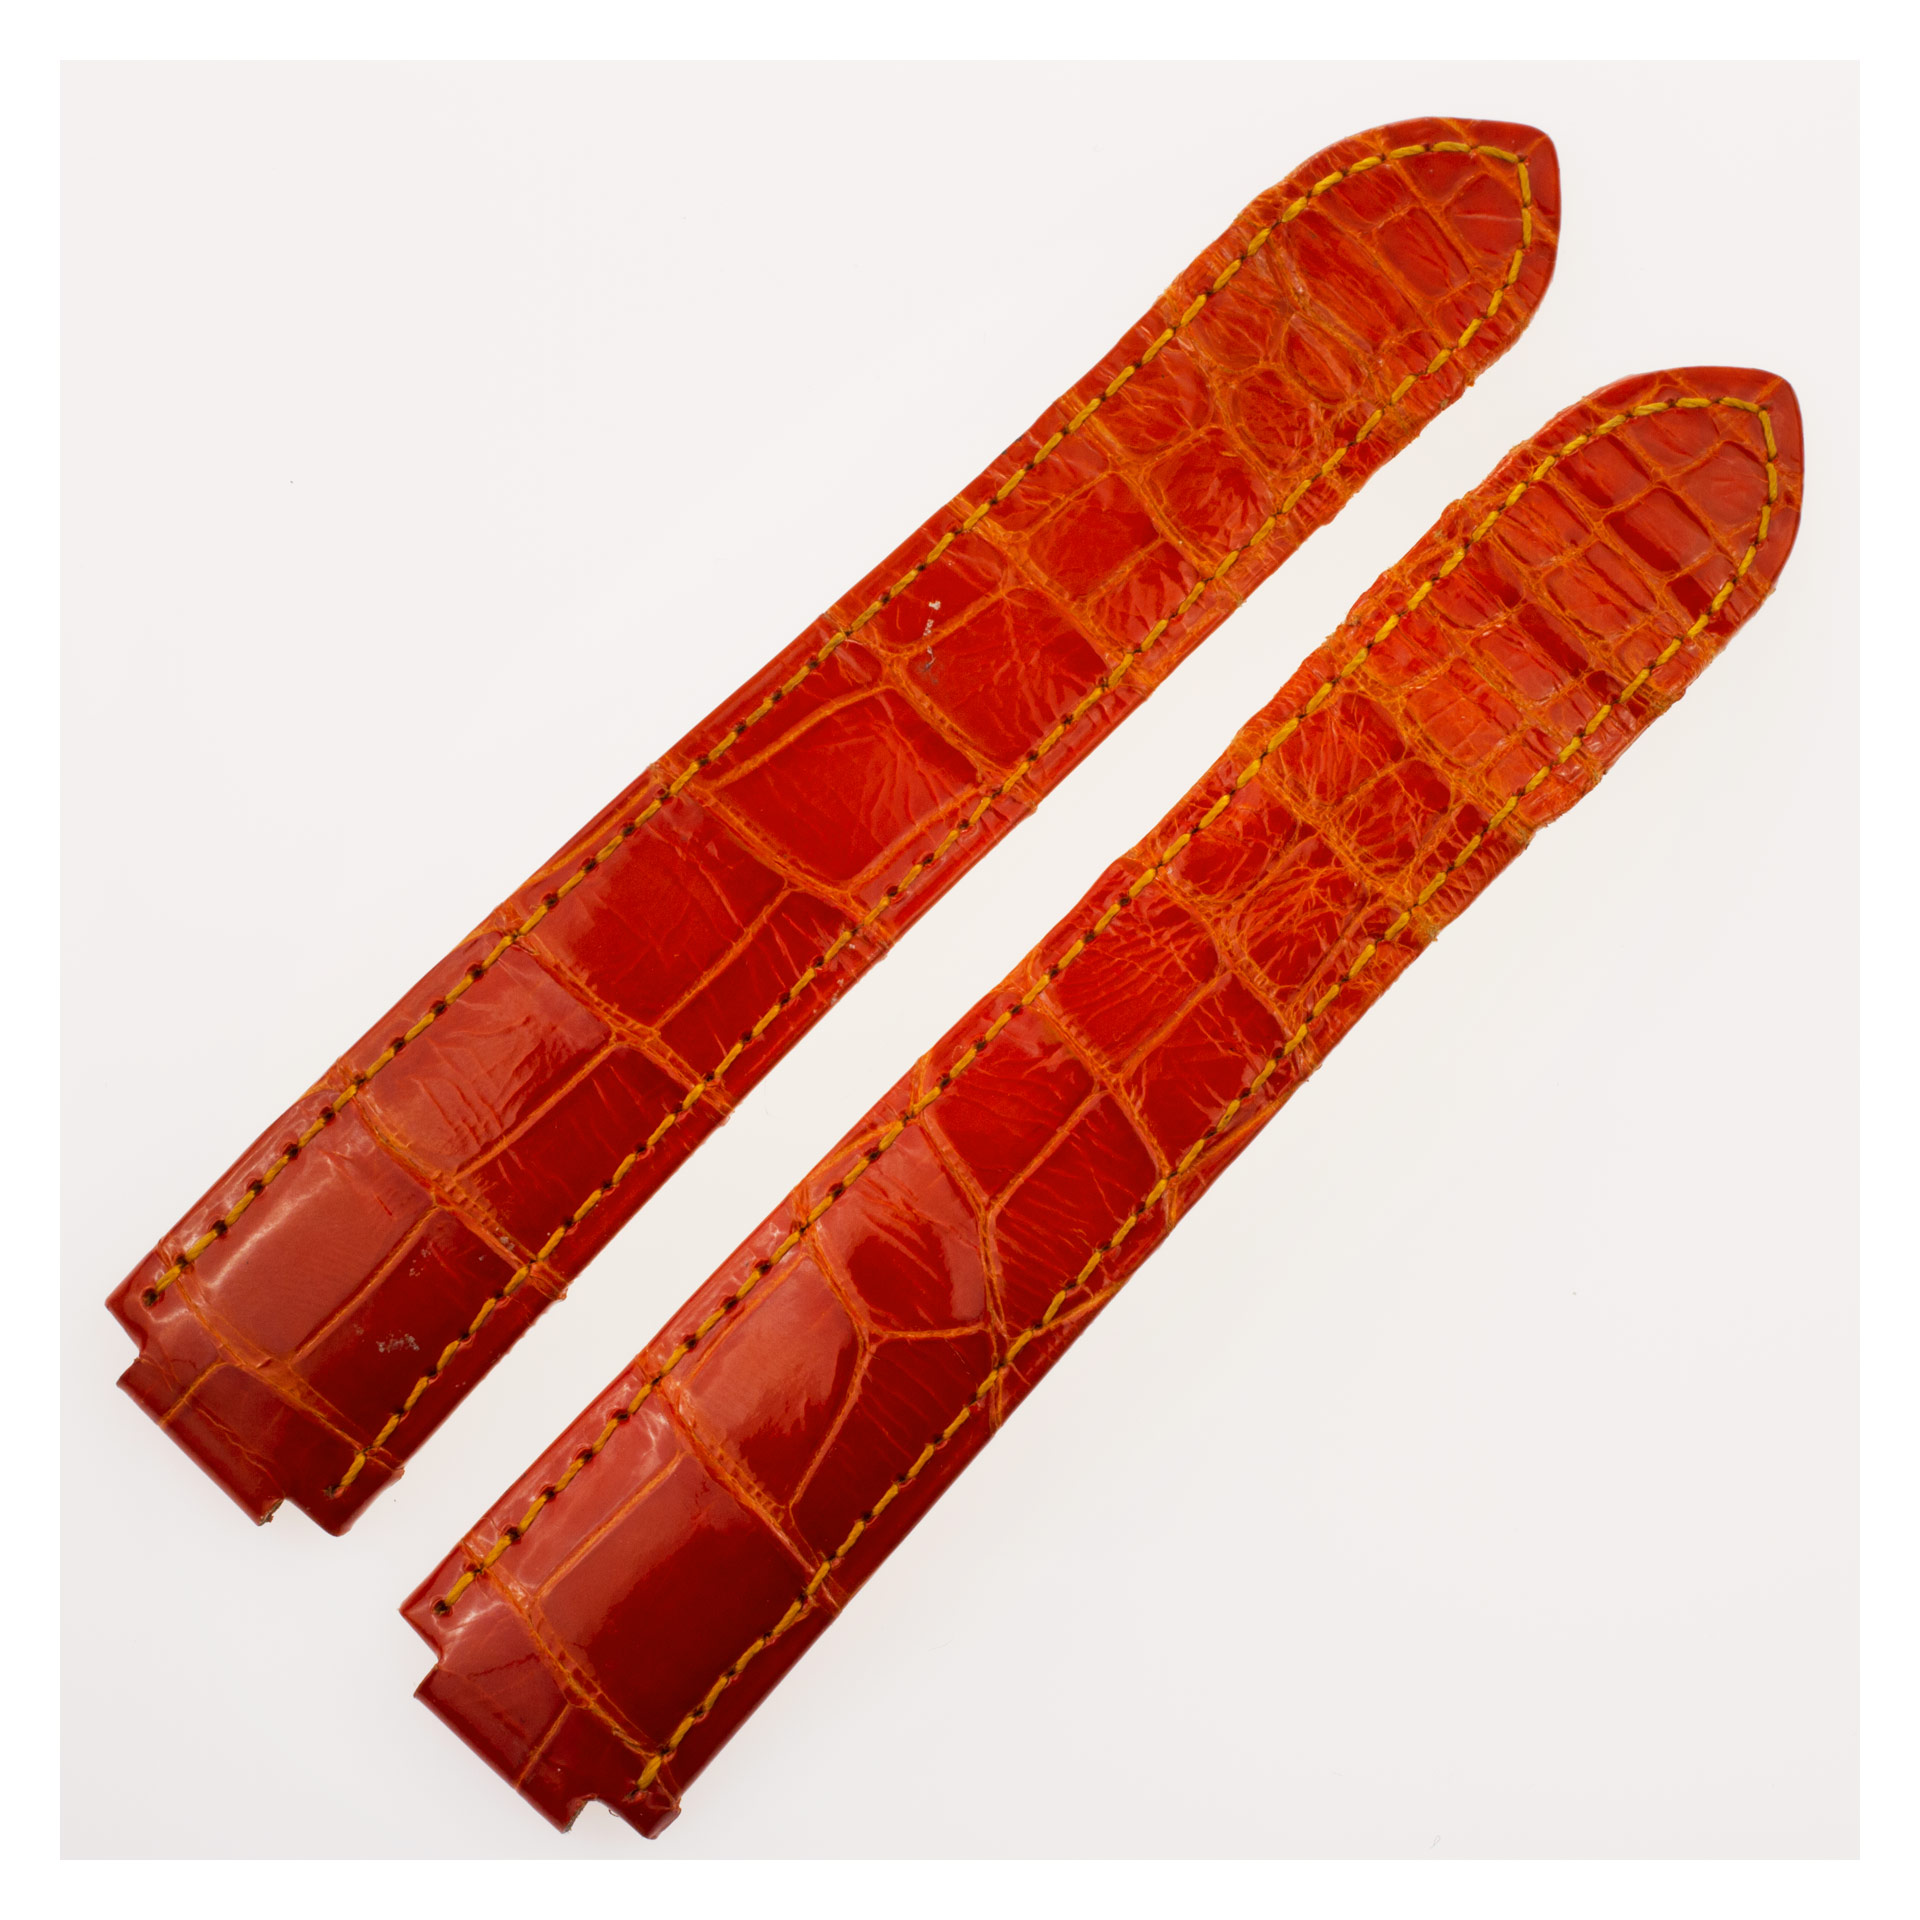 Cartier bright orange alligator strap by 18mm by lug end 4.25" length image 1